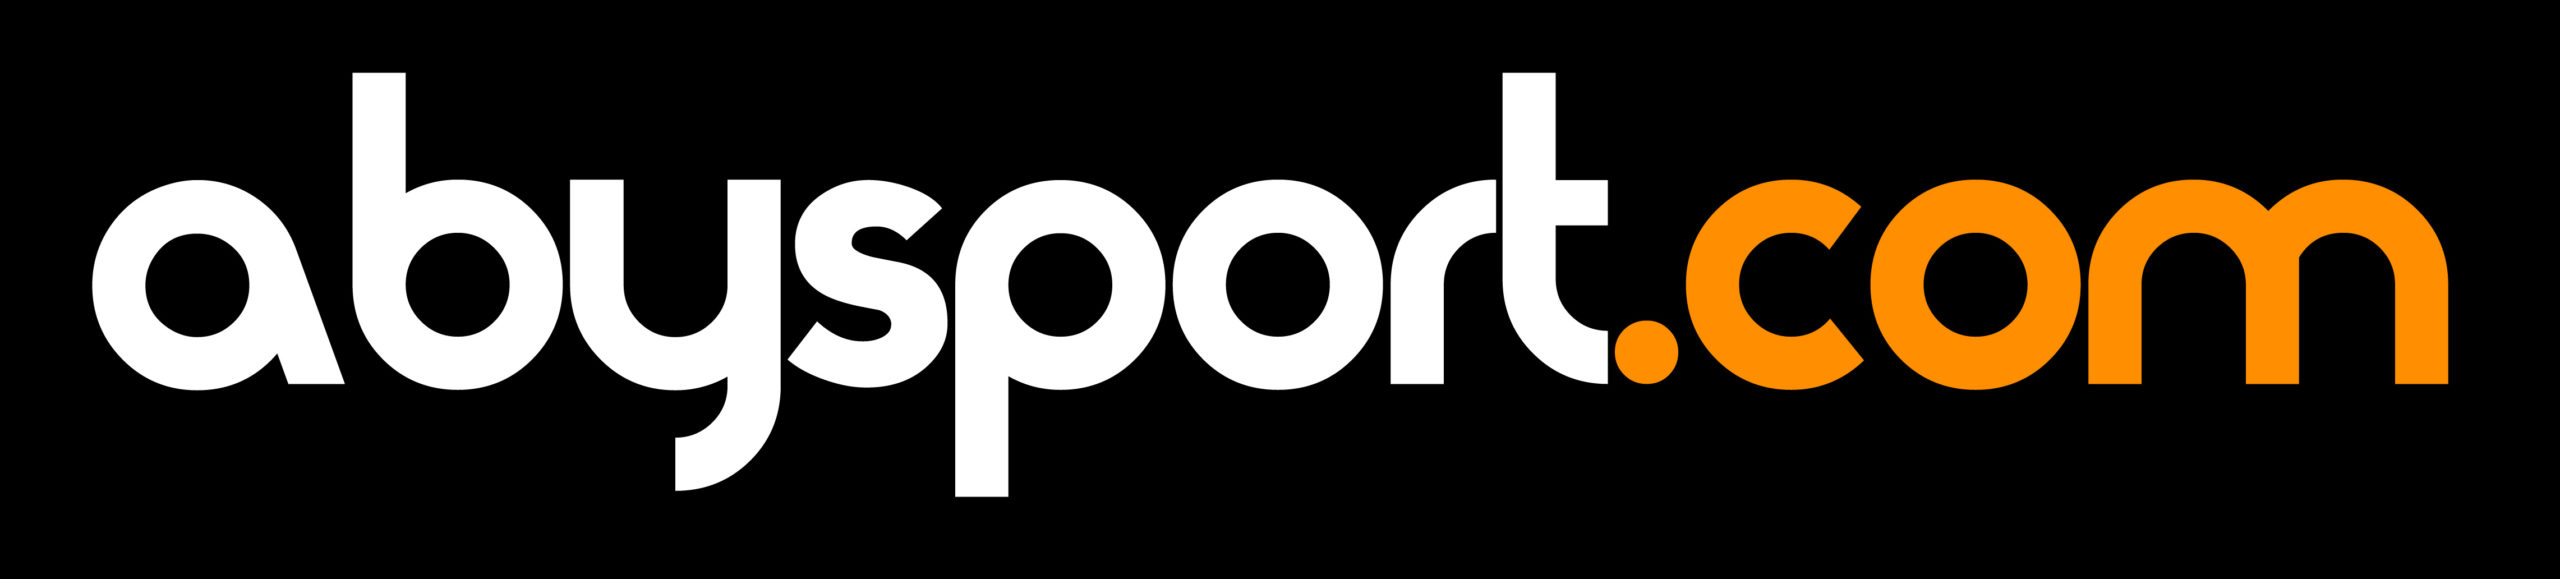 20140313_logo-abysport-300